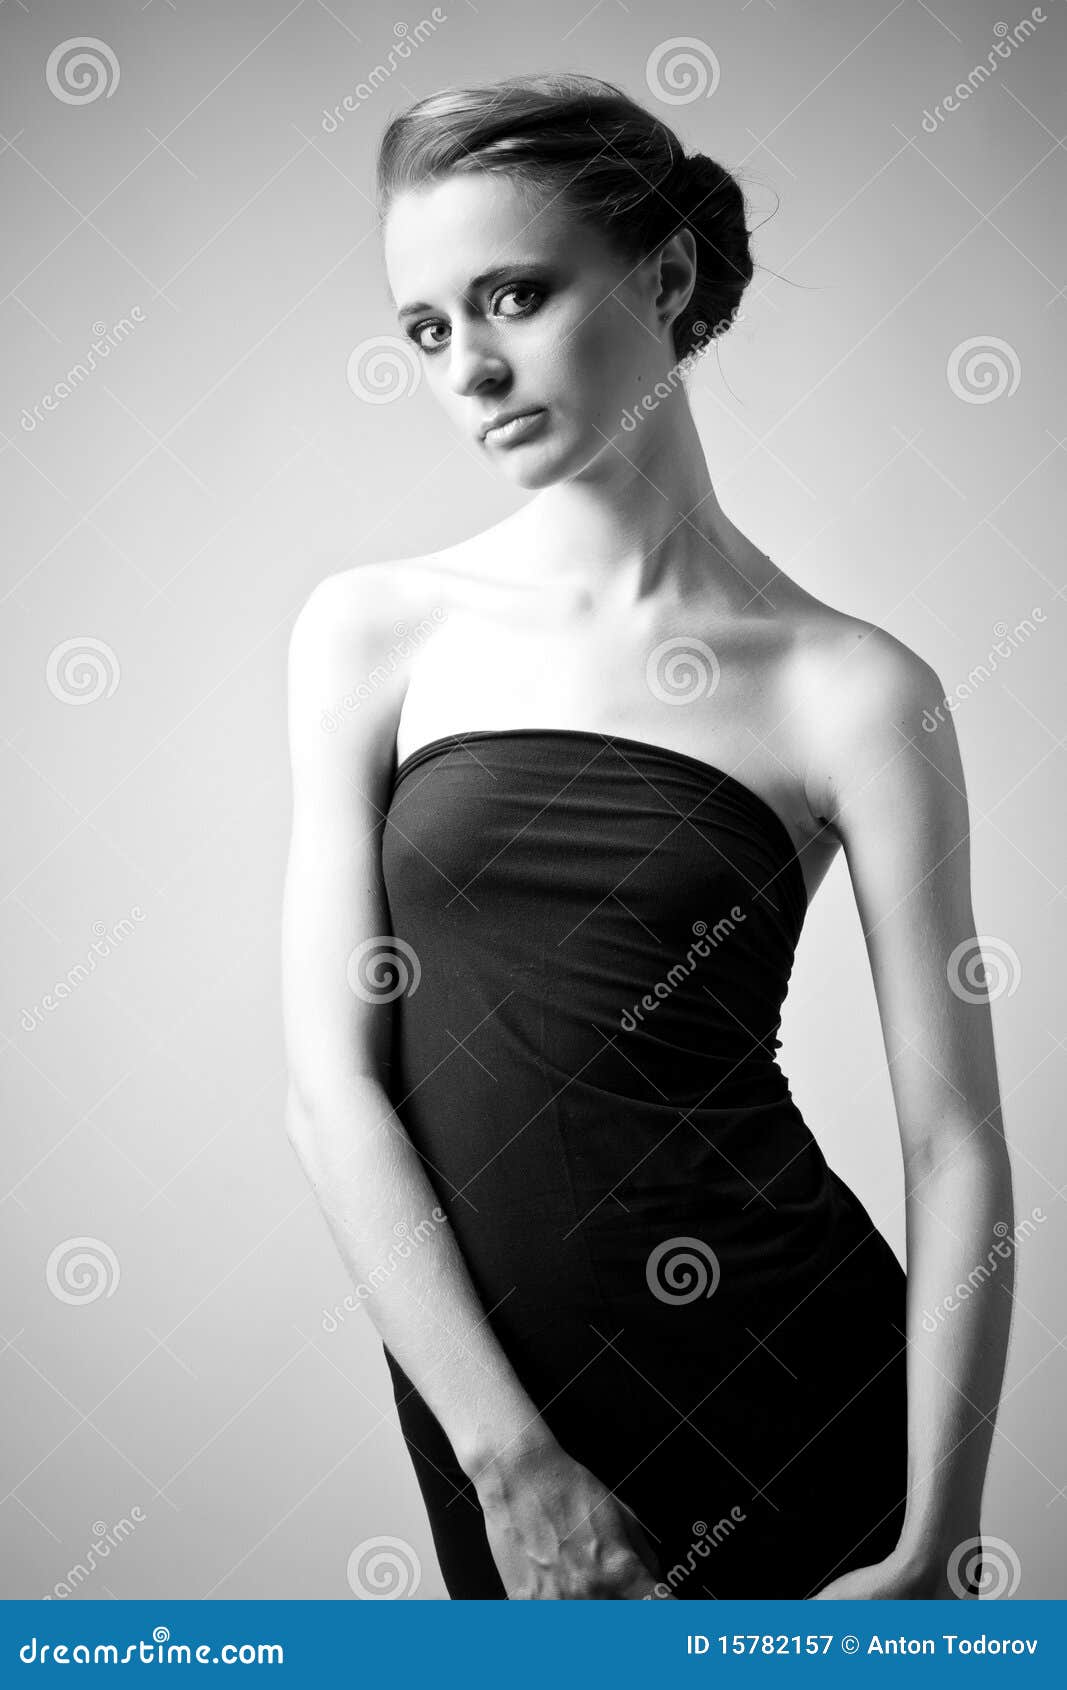 Elegant Woman in a Black Dress Stock Image - Image of figure, female ...